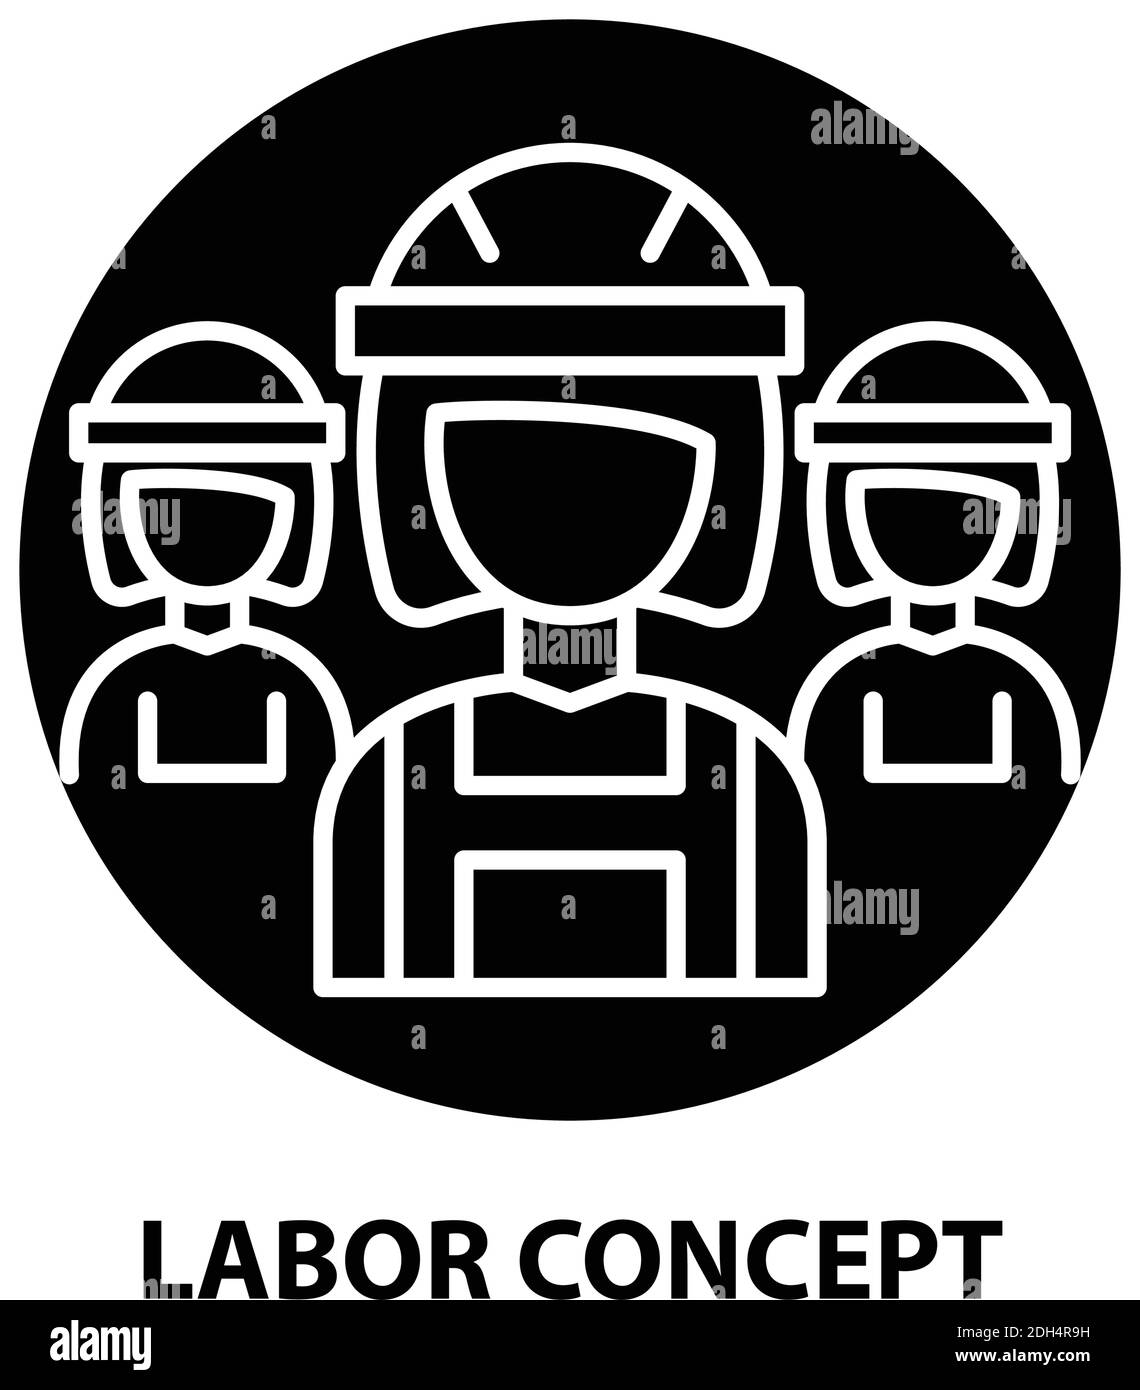 labor concept icon, black vector sign with editable strokes, concept illustration Stock Vector